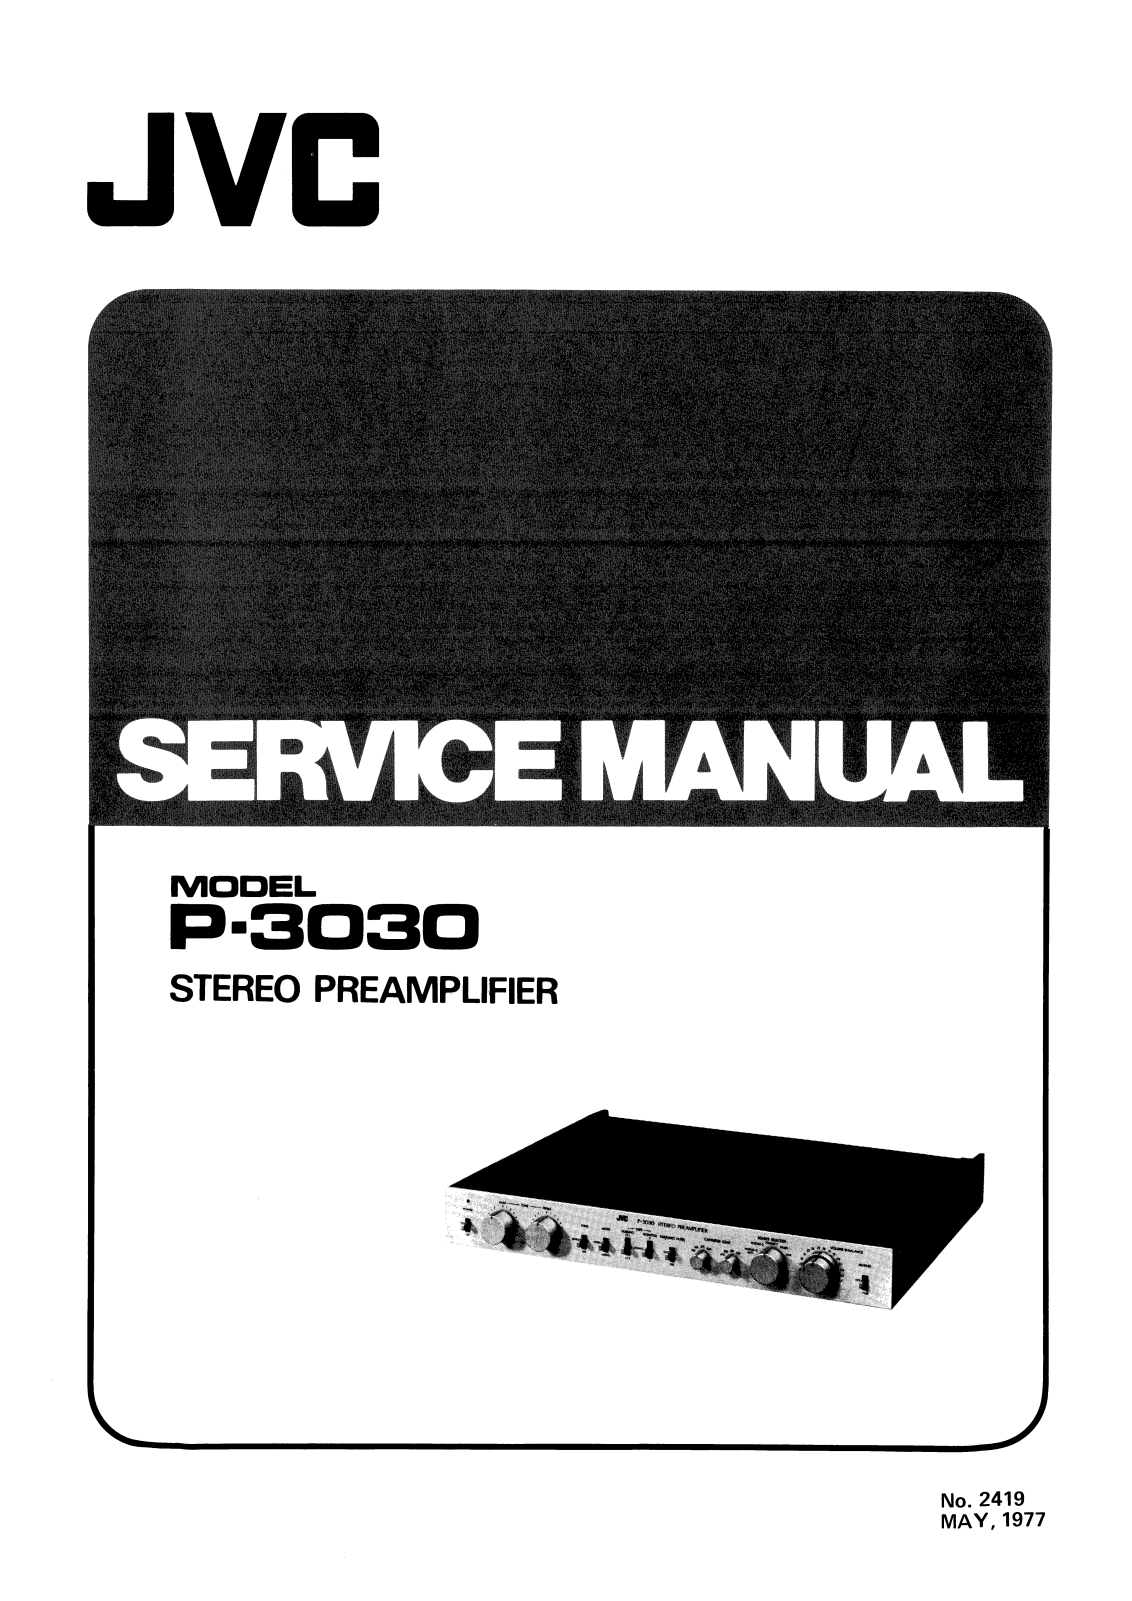 Jvc P-3030 Service Manual